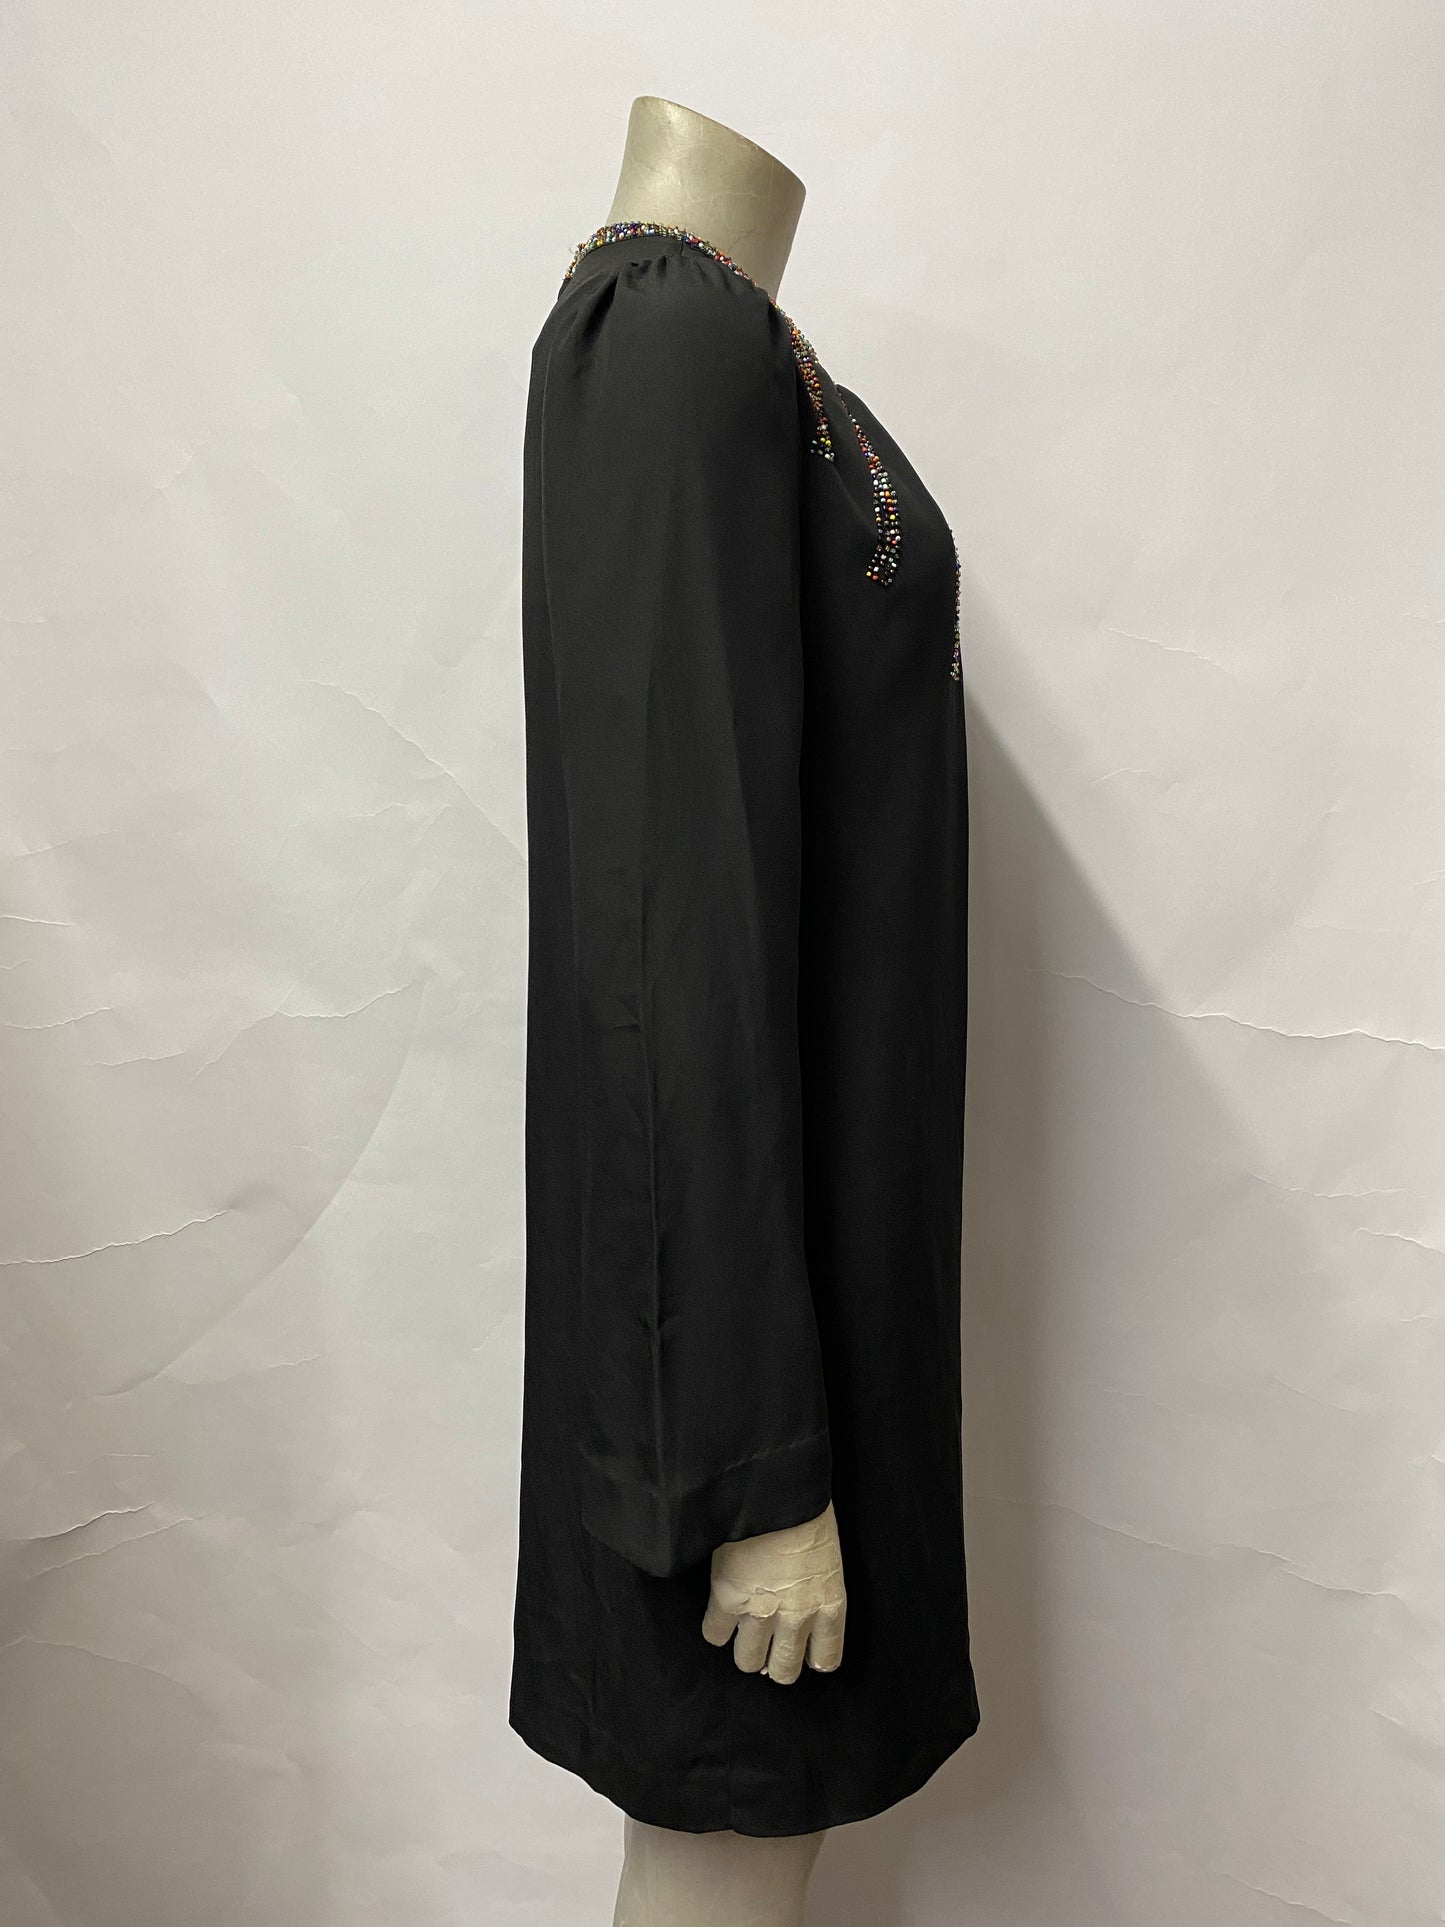 Tegan Black Rainbow Sequin Long Sleeve Tunic Dress 10 BNWT